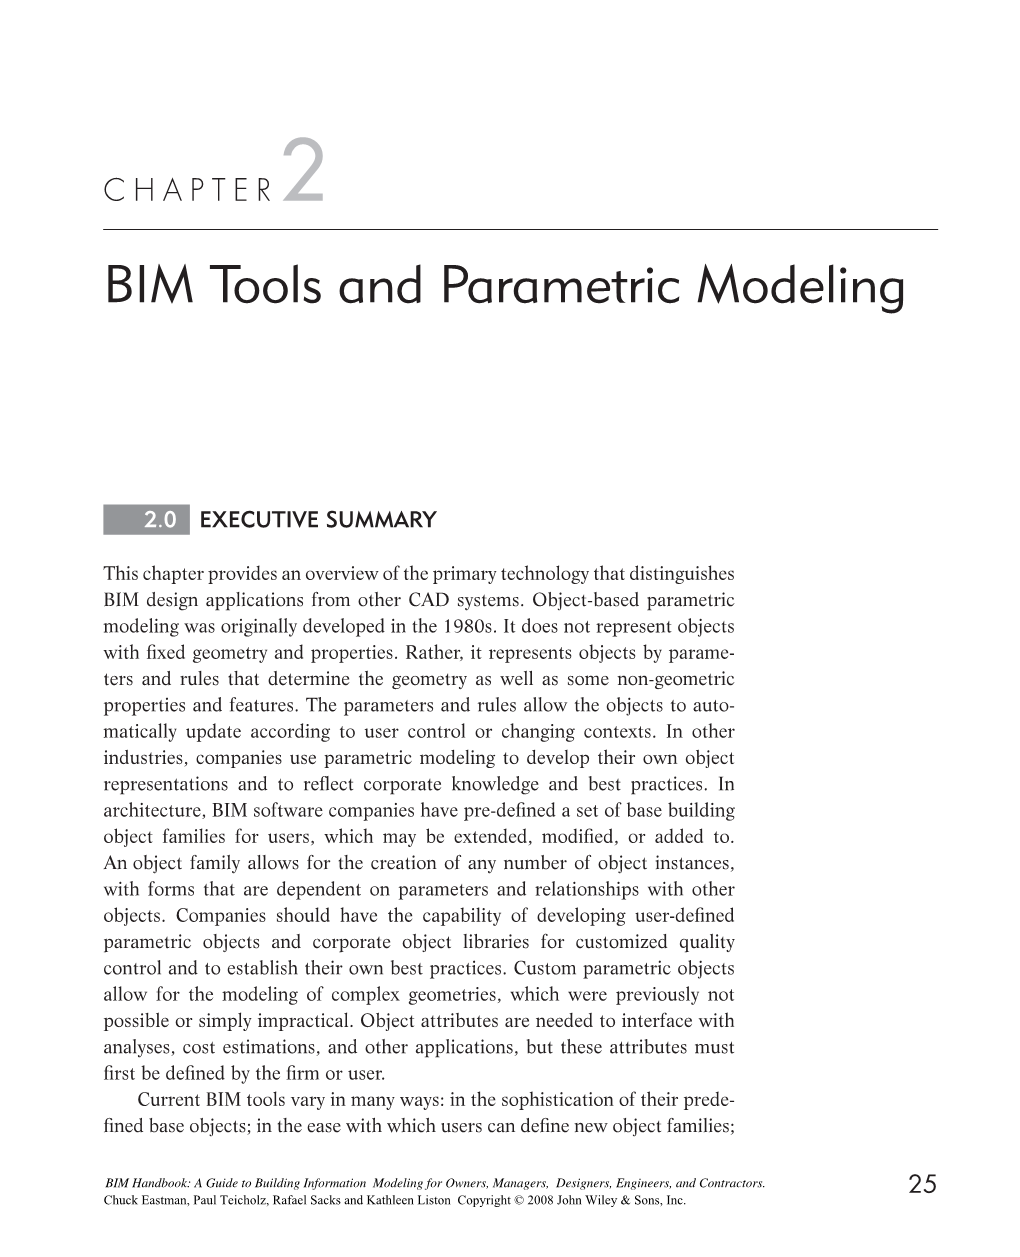 BIM Tools and Parametric Modeling